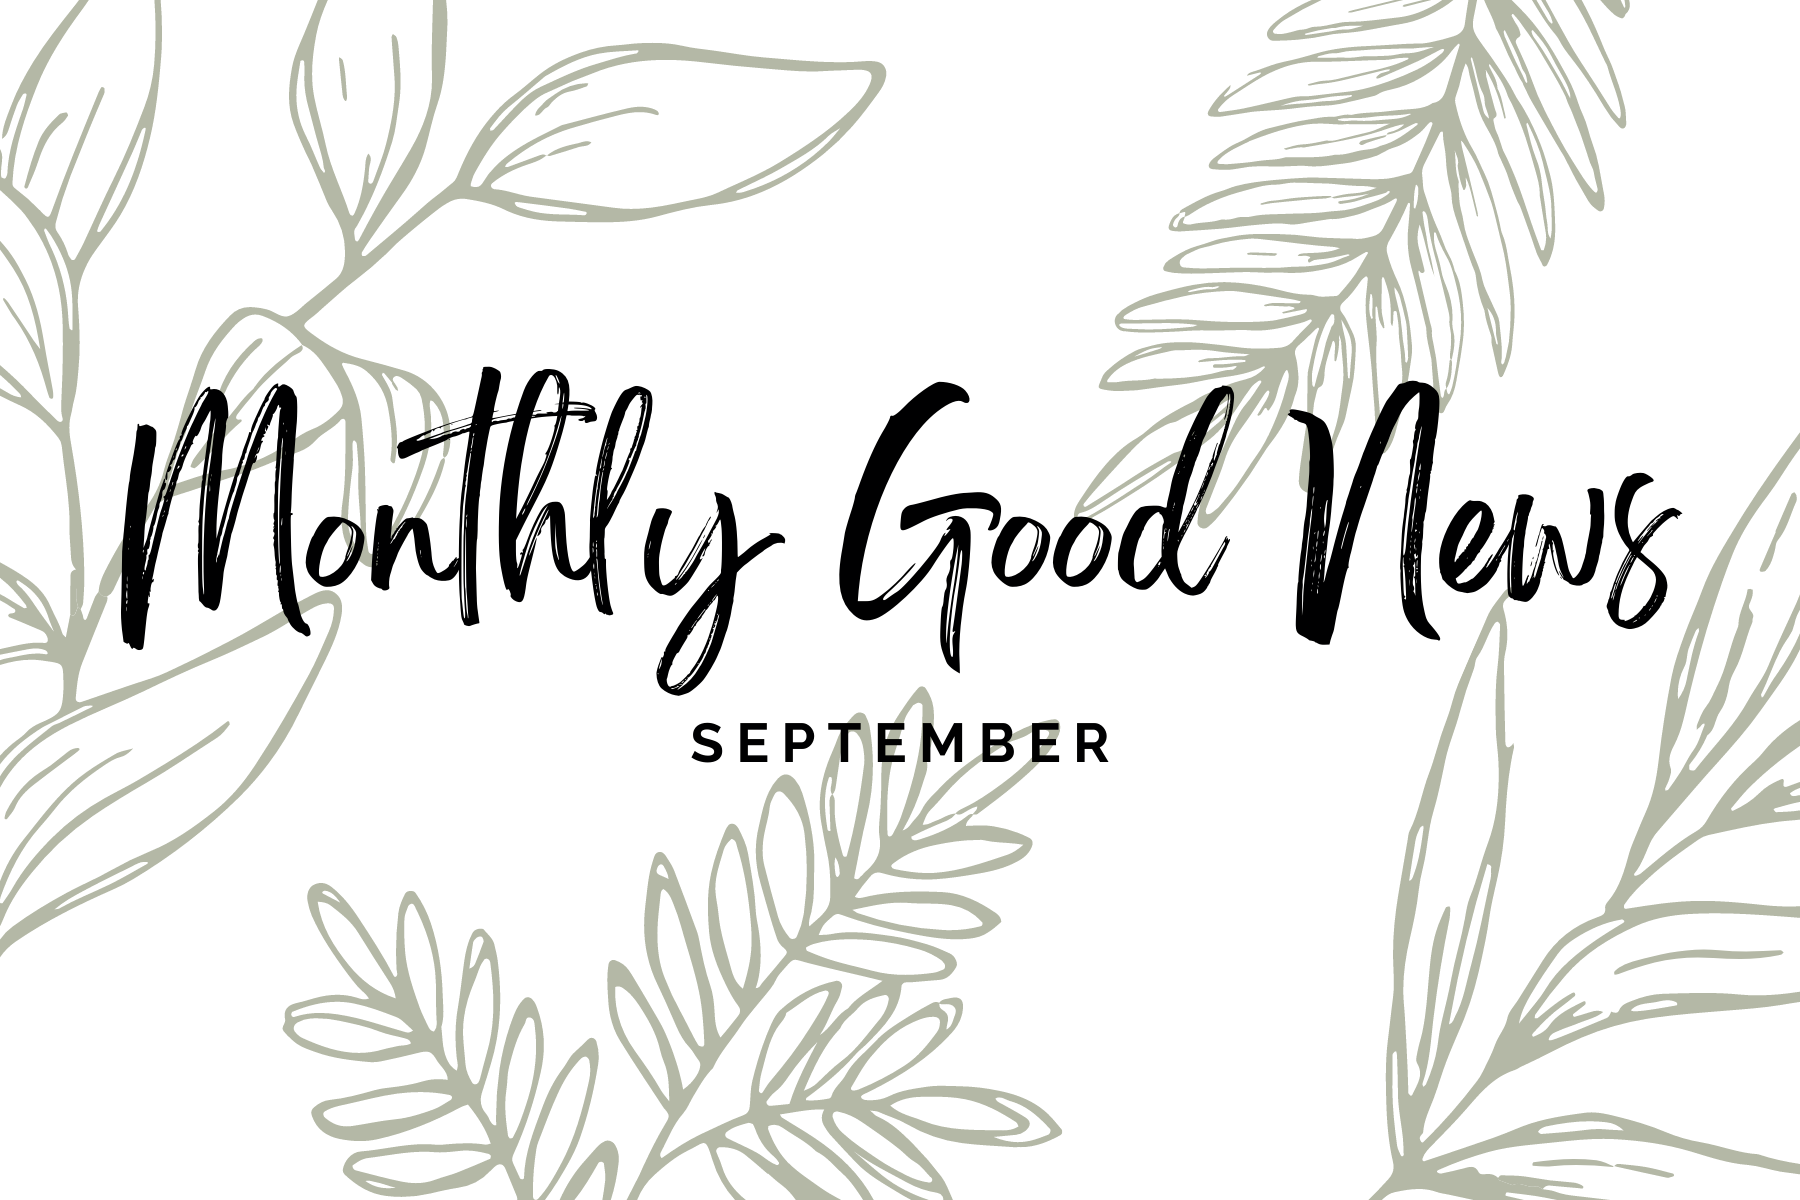 "Monthly Good News: September" on a background of light green leaf illustrations.